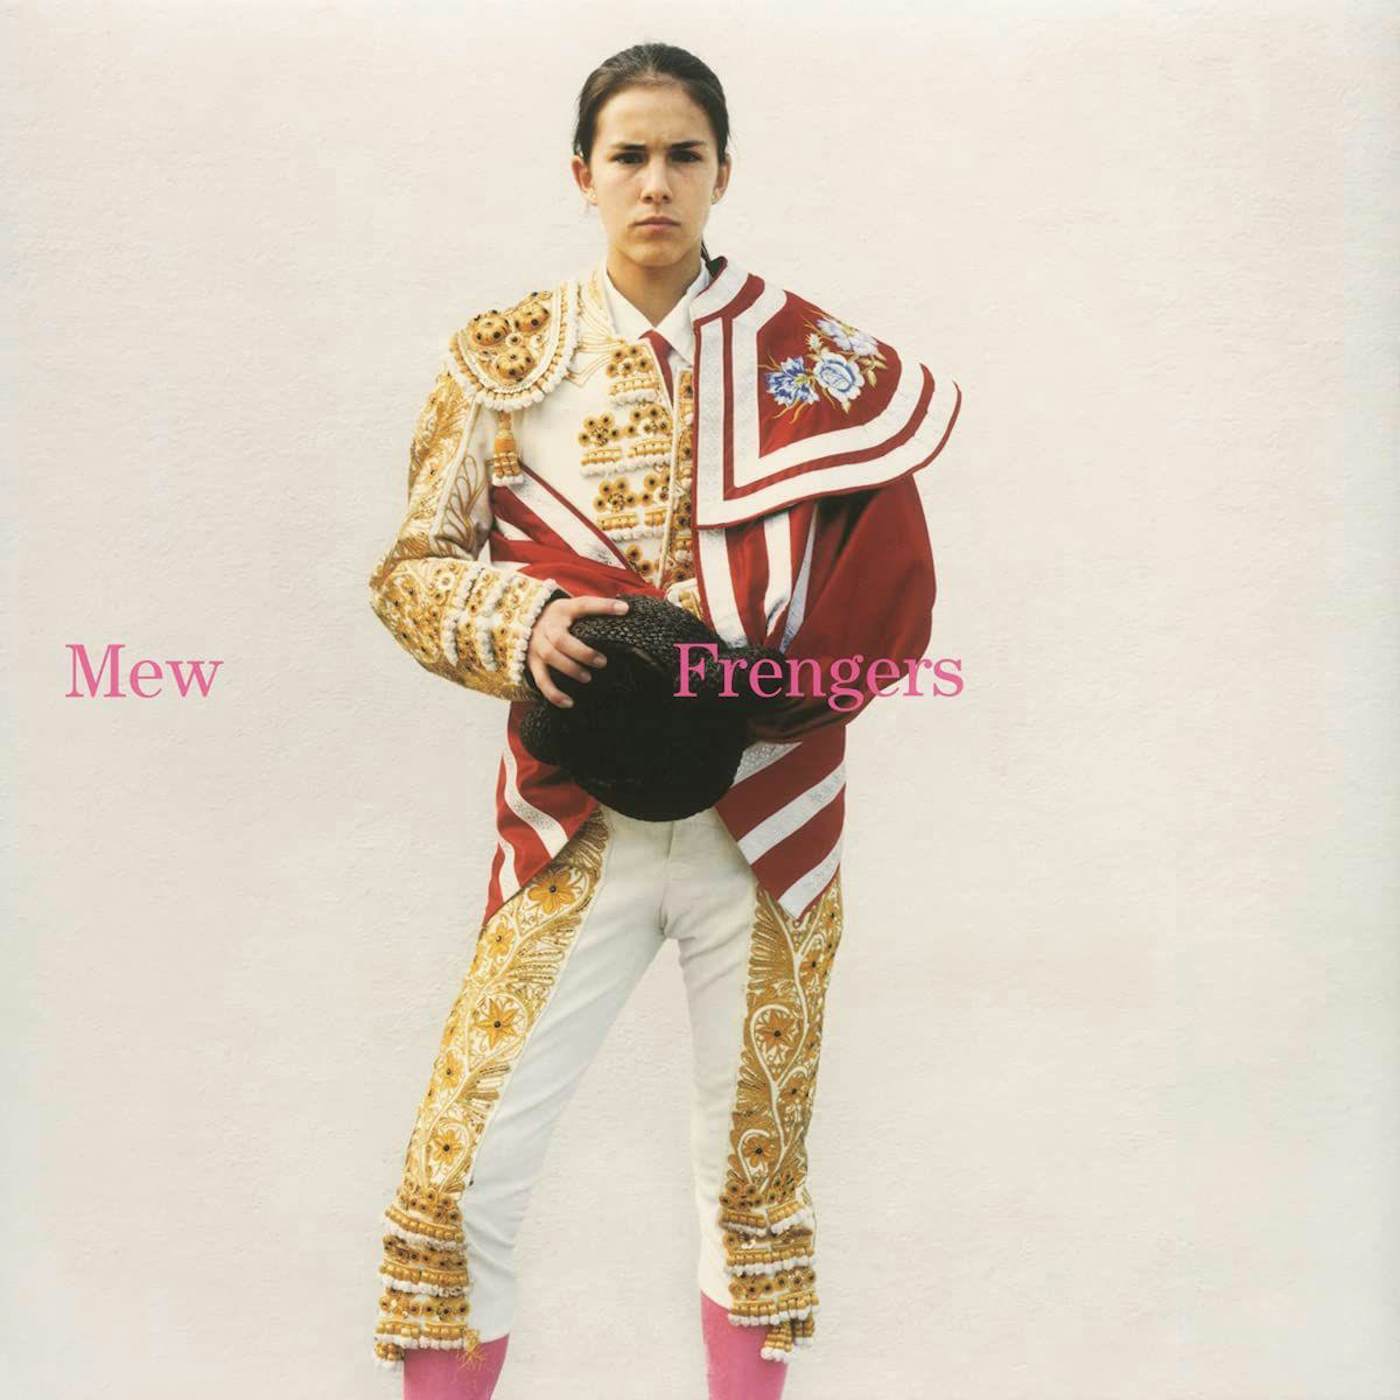 Mew Frengers (20th Anniversary/Gold/180g) Vinyl Record